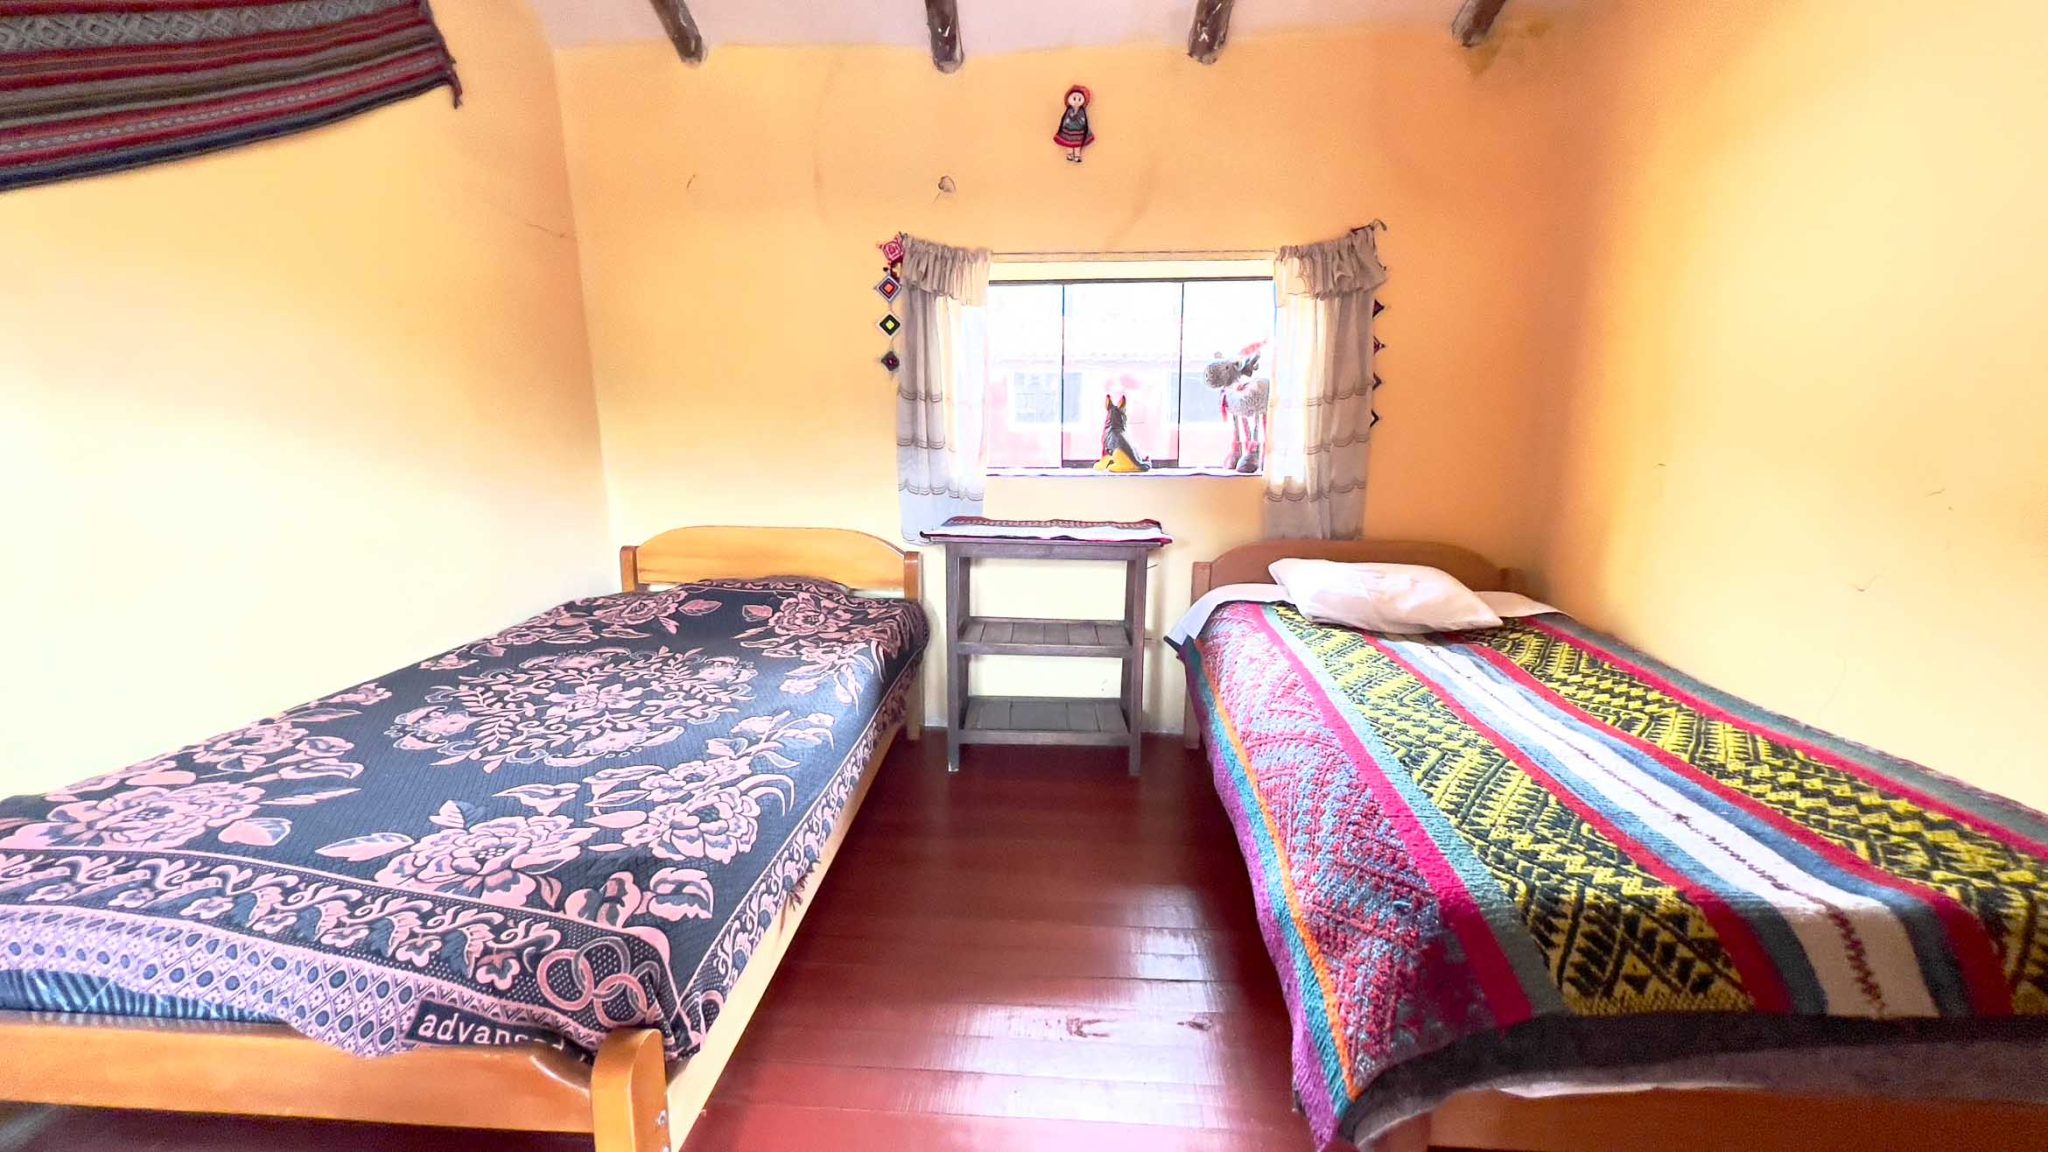 Peru indigenous accommodation 4 13 scaled - Indigenous Community Immersion Peru